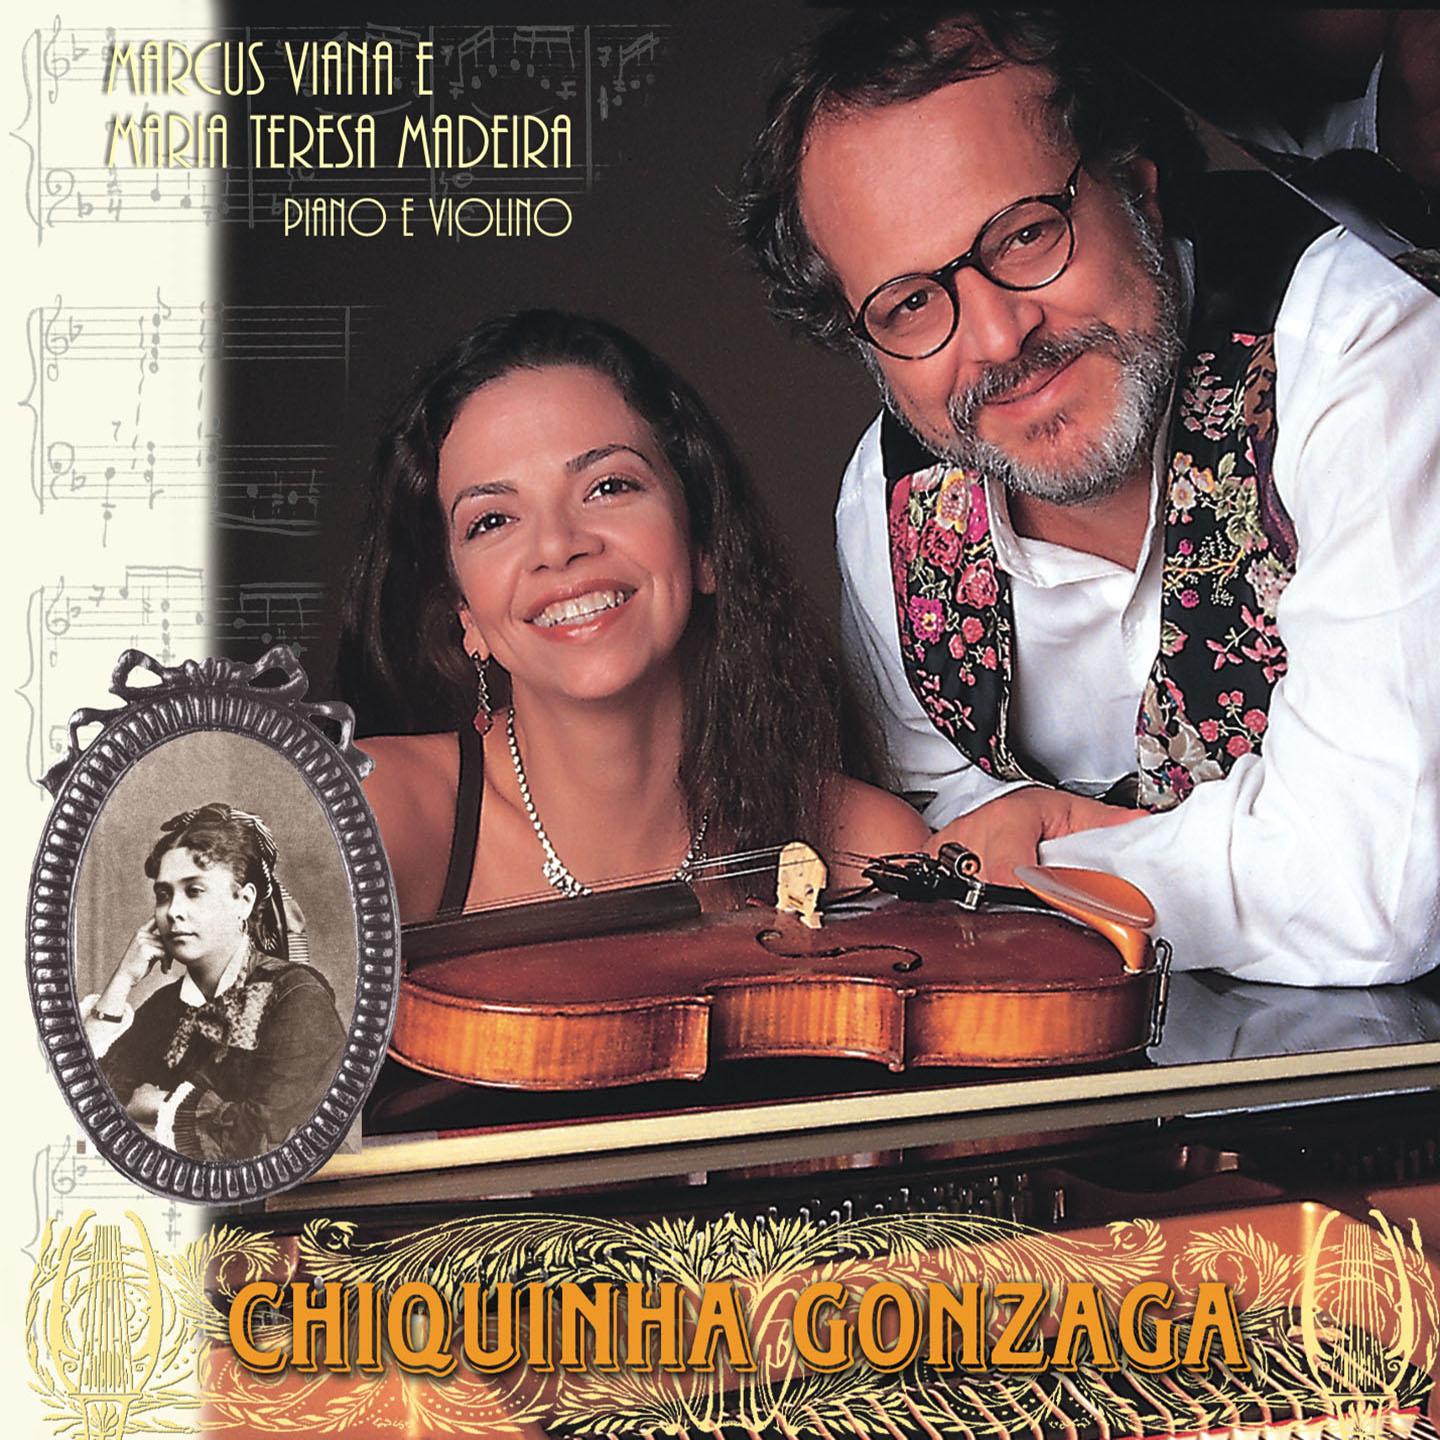 Постер альбома Chiquinha Gonzaga - Duo Piano e Violino - Marcus Viana e Maria Teresa Madeira